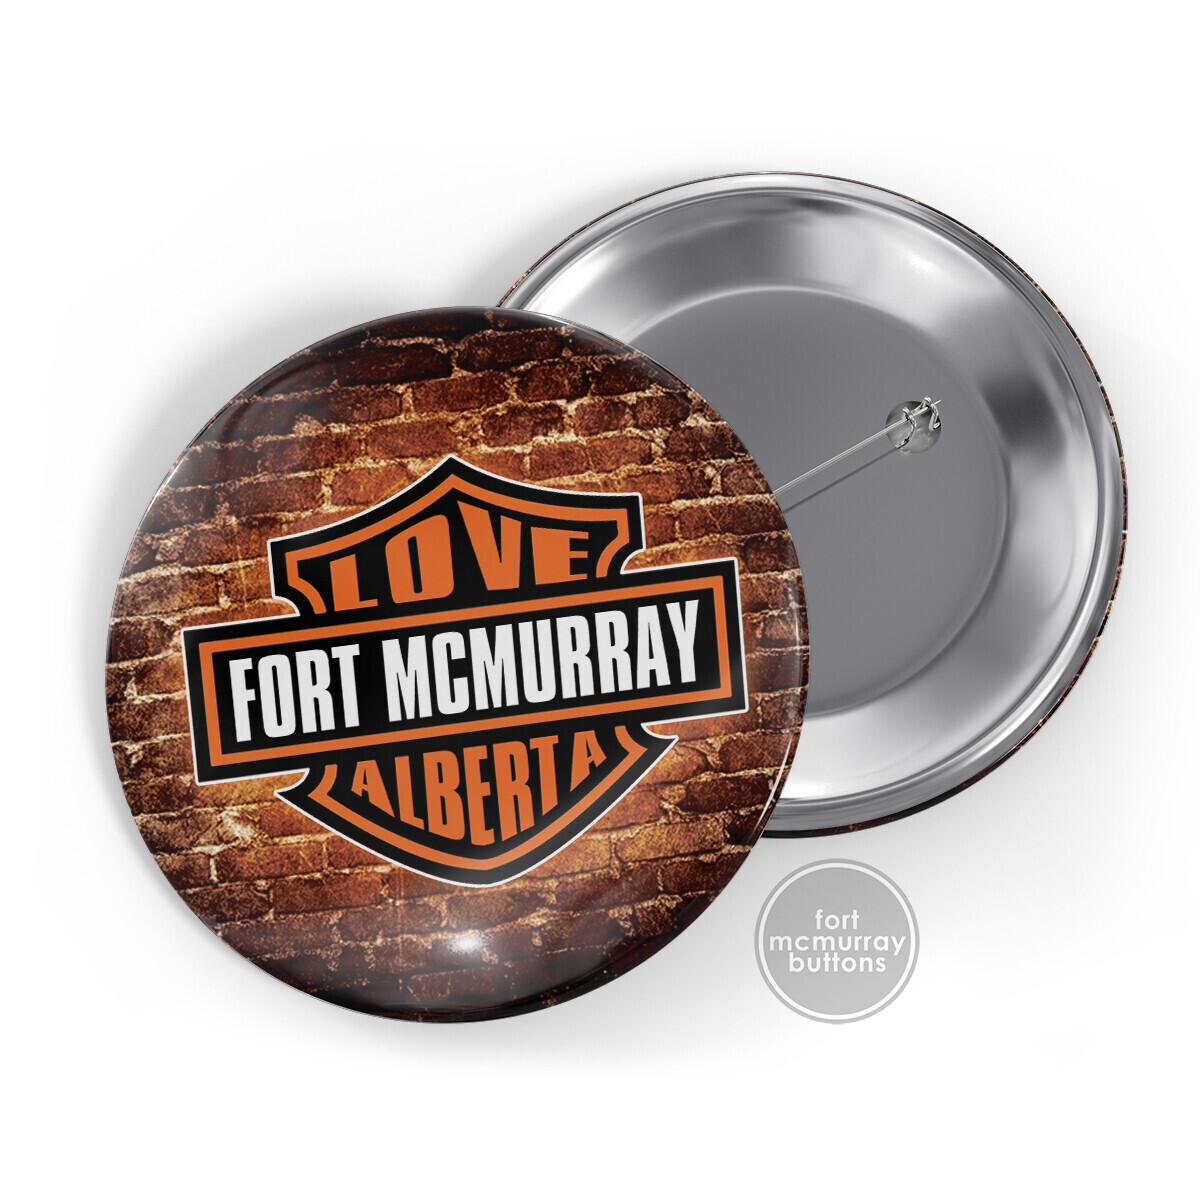 I ❤ Fort McMurray - Harley Davidson Style